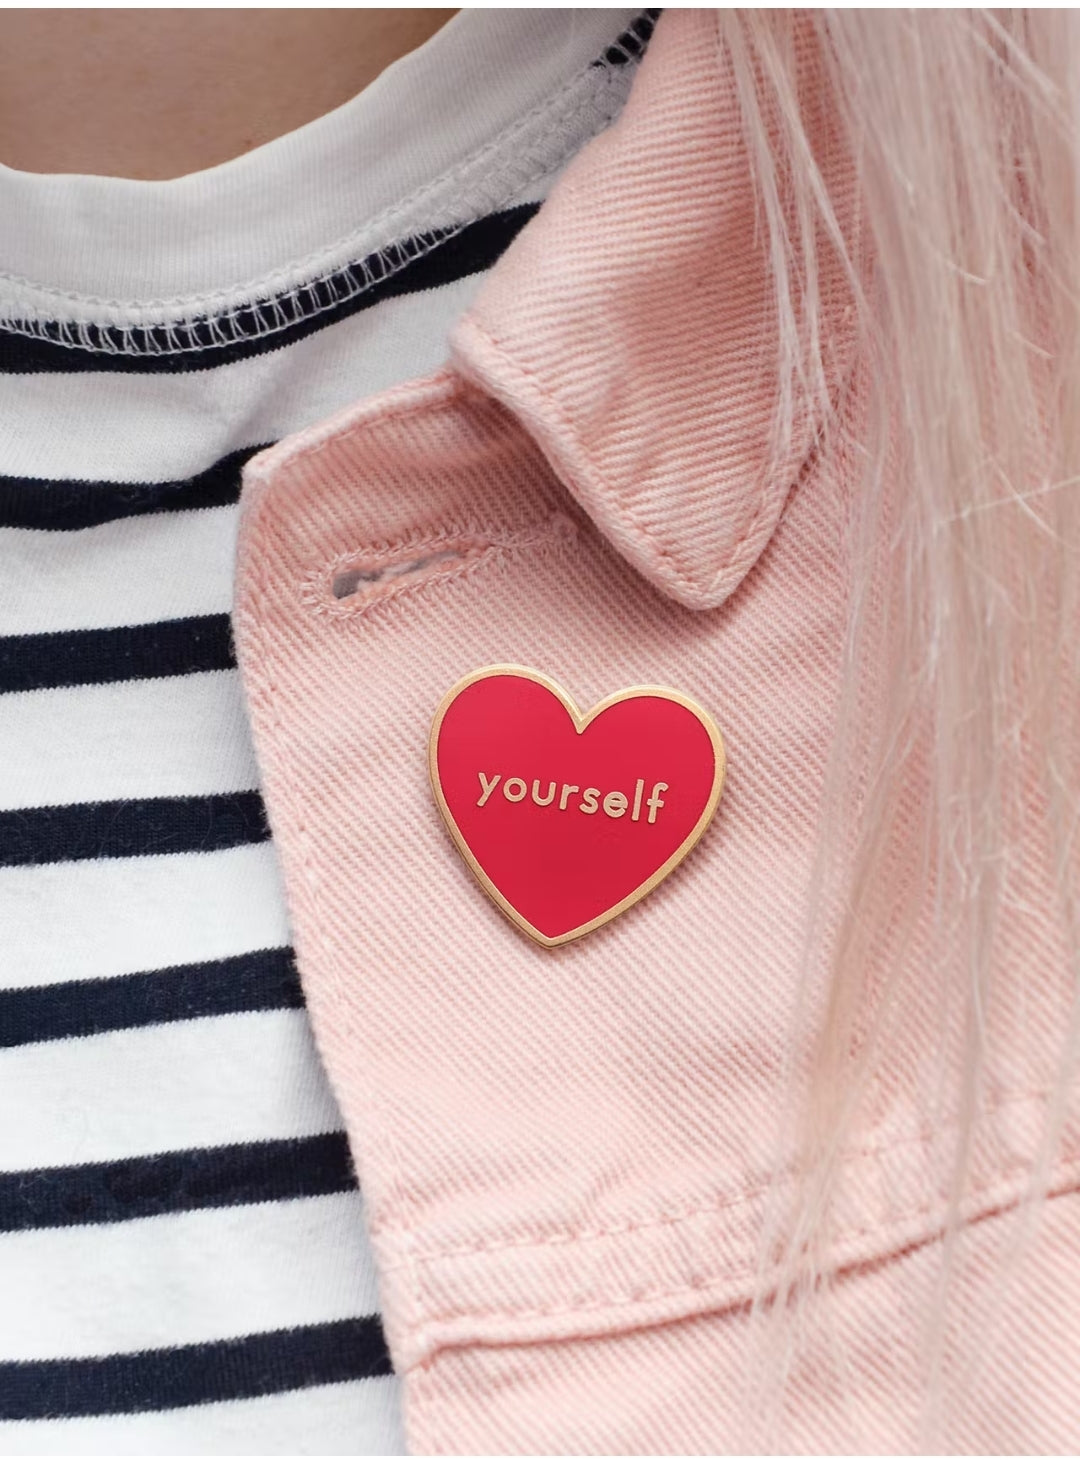 Love Yourself - Enamel Pin